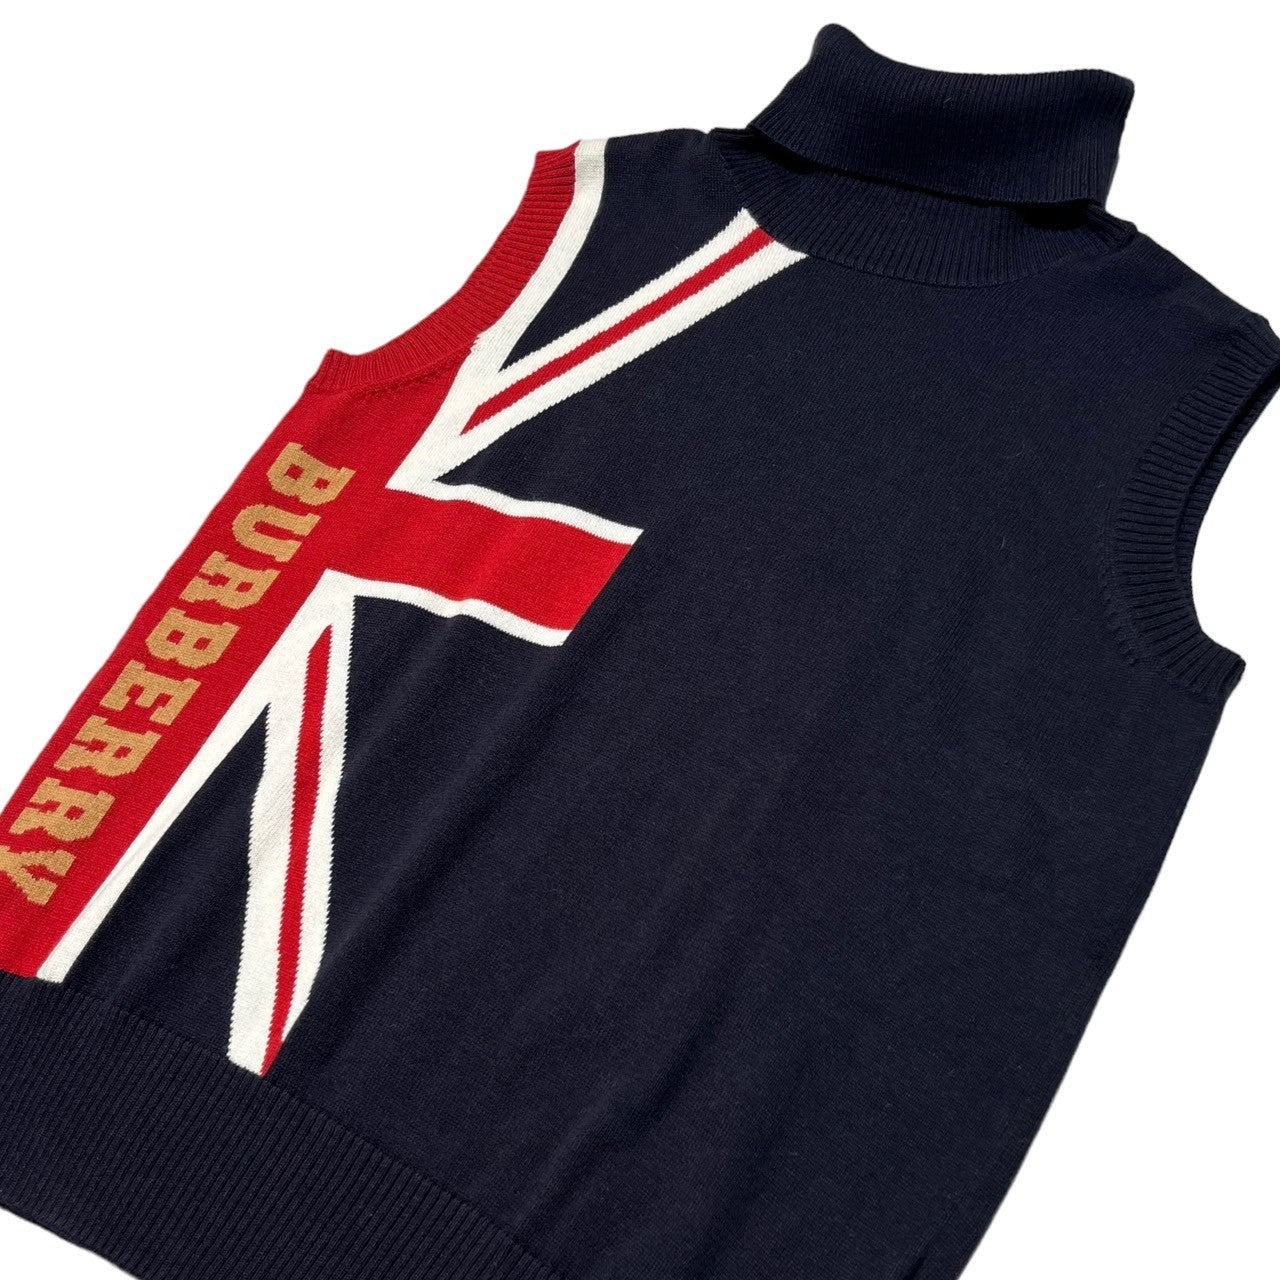 BURBERRY LONDON(バーバリーロンドン) Union Jack Sleeveless Turtleneck Logo Knit ユニオンジャック ノースリーブ タートルネック ロゴ ニット BB242-927-30 160(レディースS～M程度) ネイビー×レッド